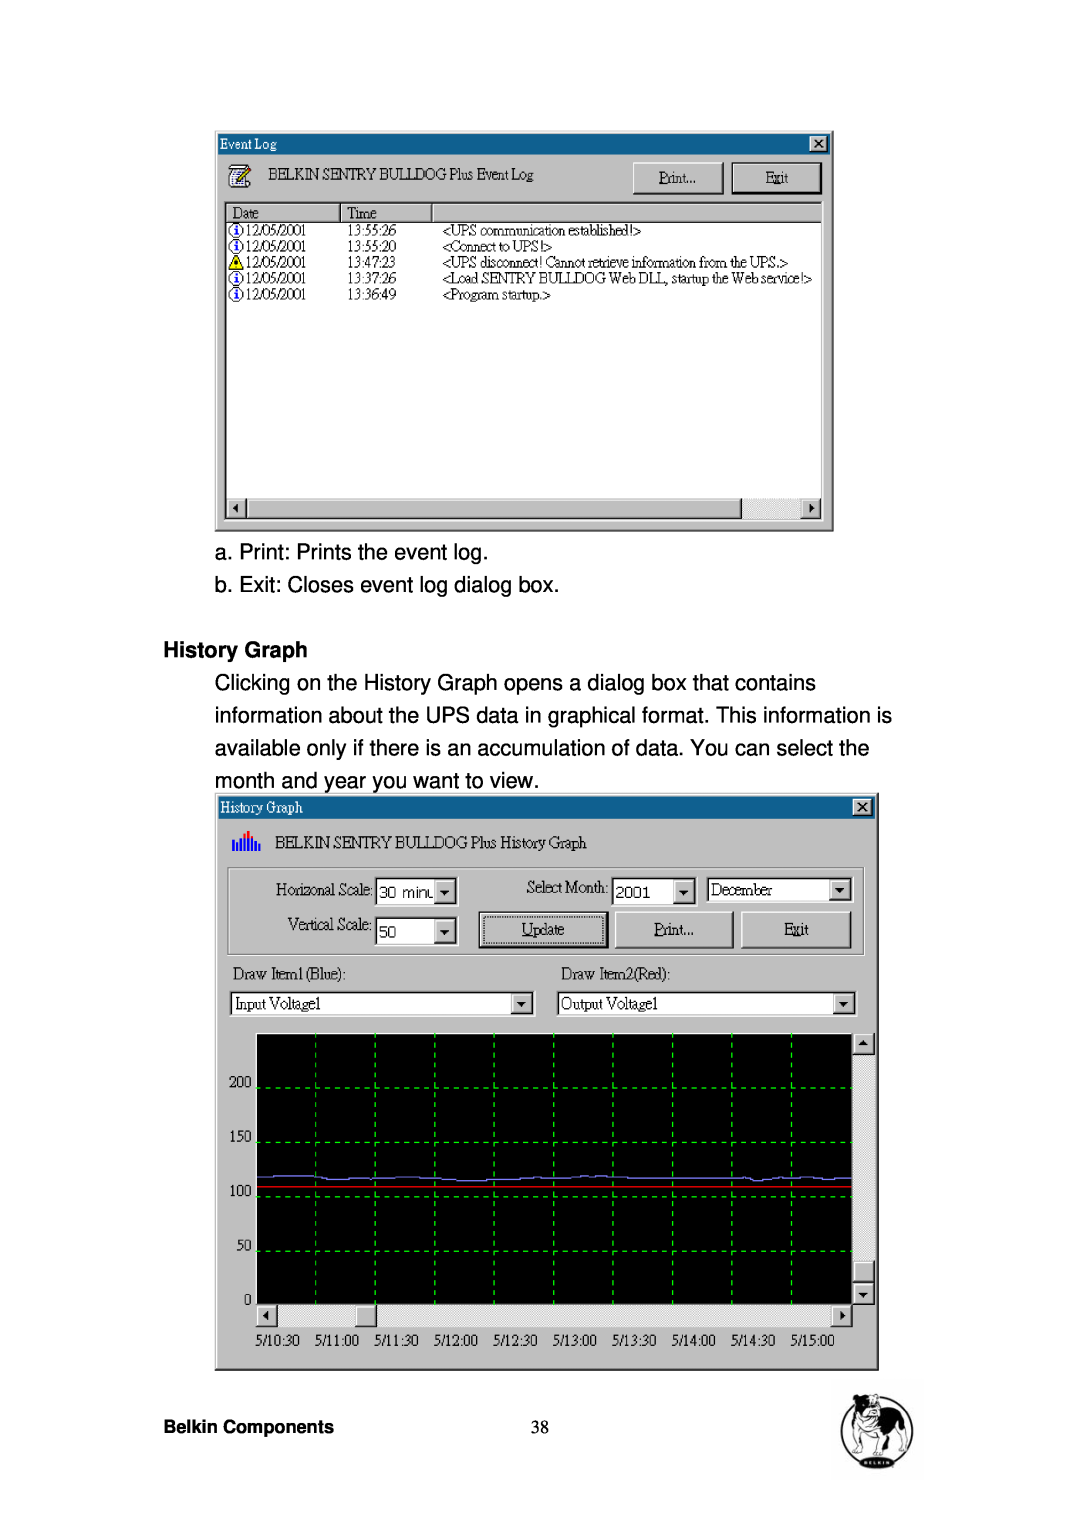 Belkin belkin bulldog plus- shutdown management software for windows History Graph, a. Print Prints the event log 